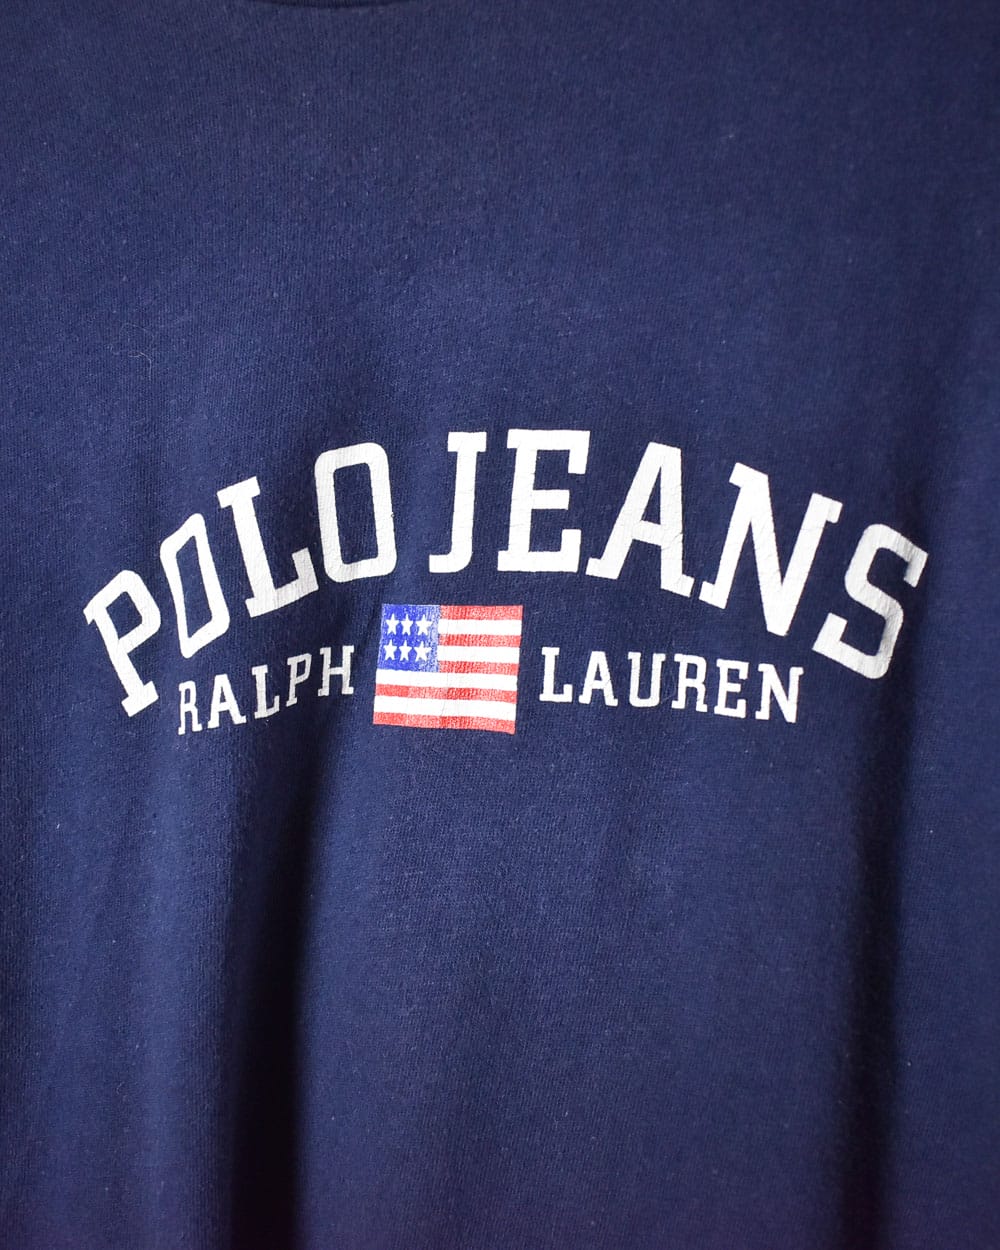 Navy Polo Jeans Ralph Lauren T-Shirt - XX-Large